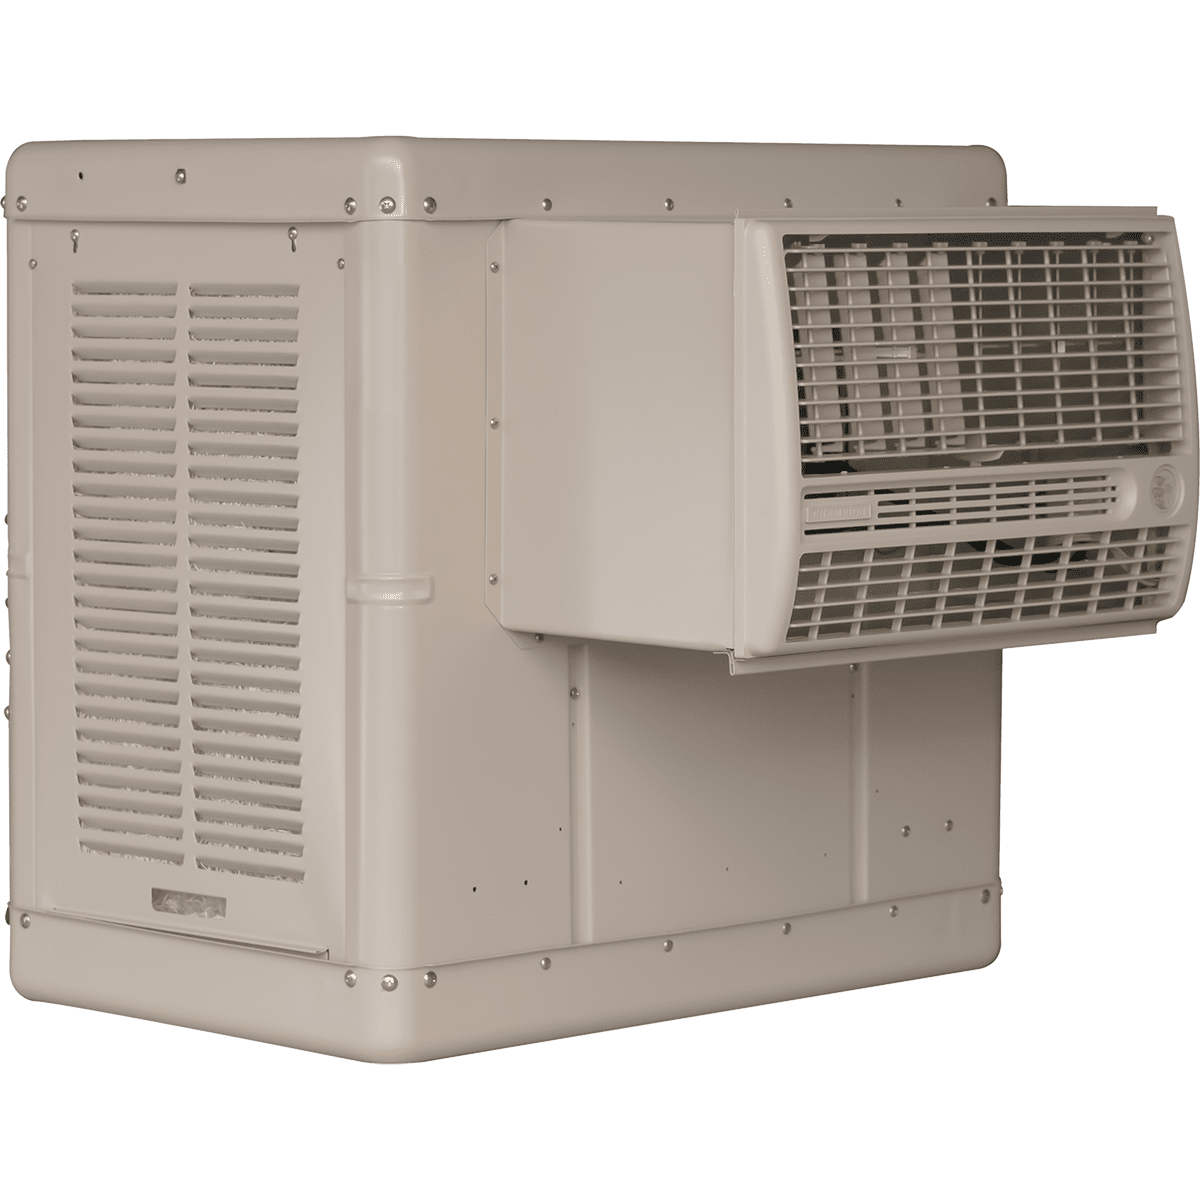 Essick Air RN35W Window Evaporative Cooler